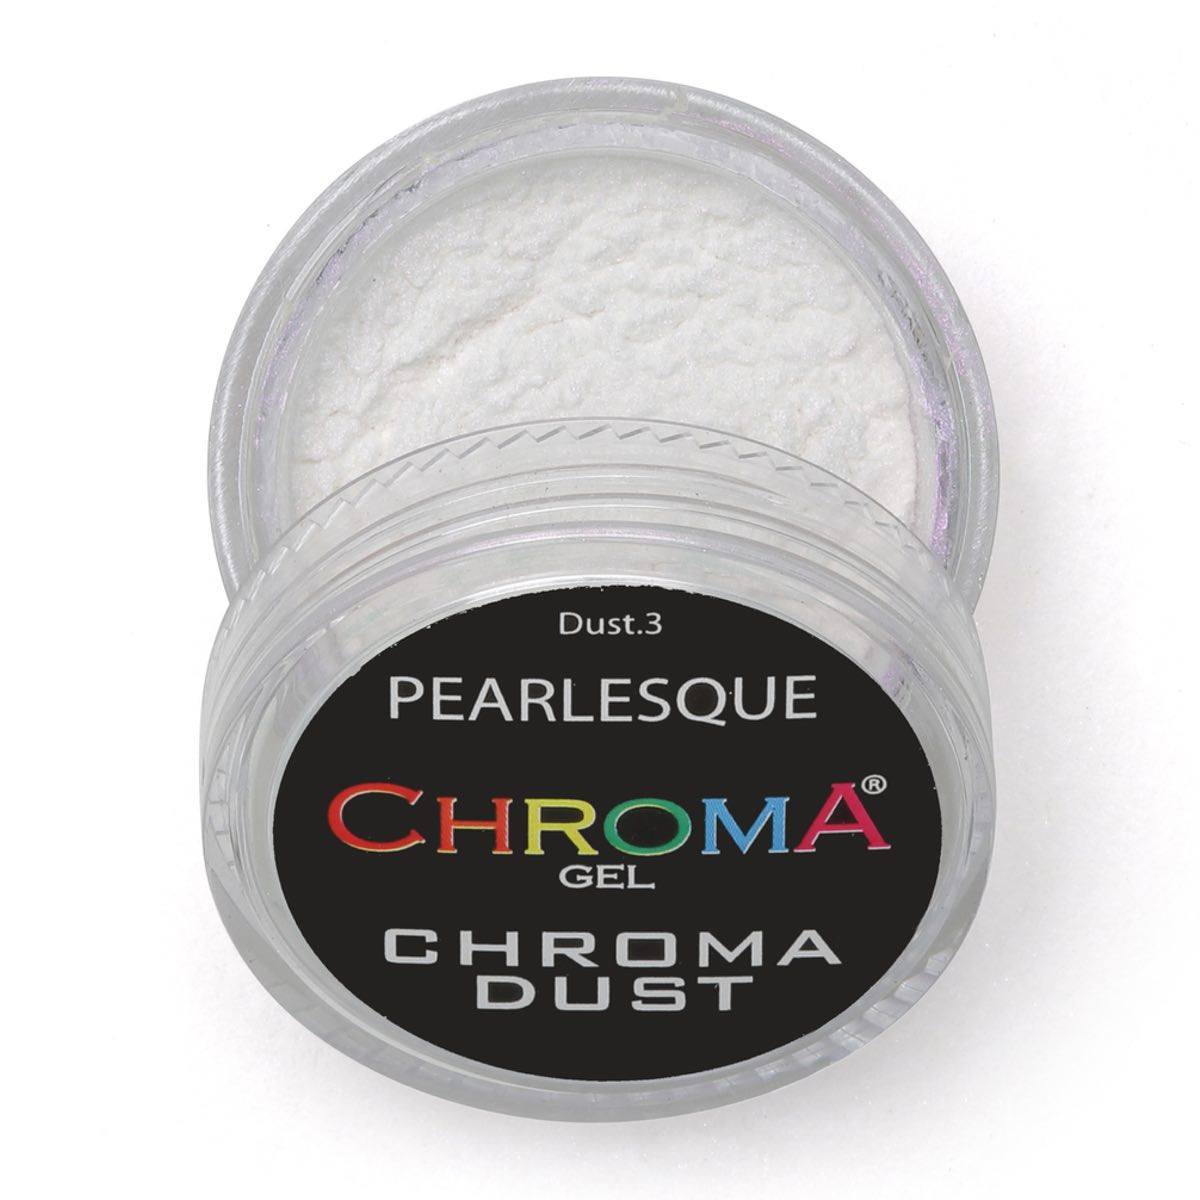 Chroma Dust No.3 Pearlesque Chrome Powder - Mirror Nails 2g - Beauty Hair Products Ltd